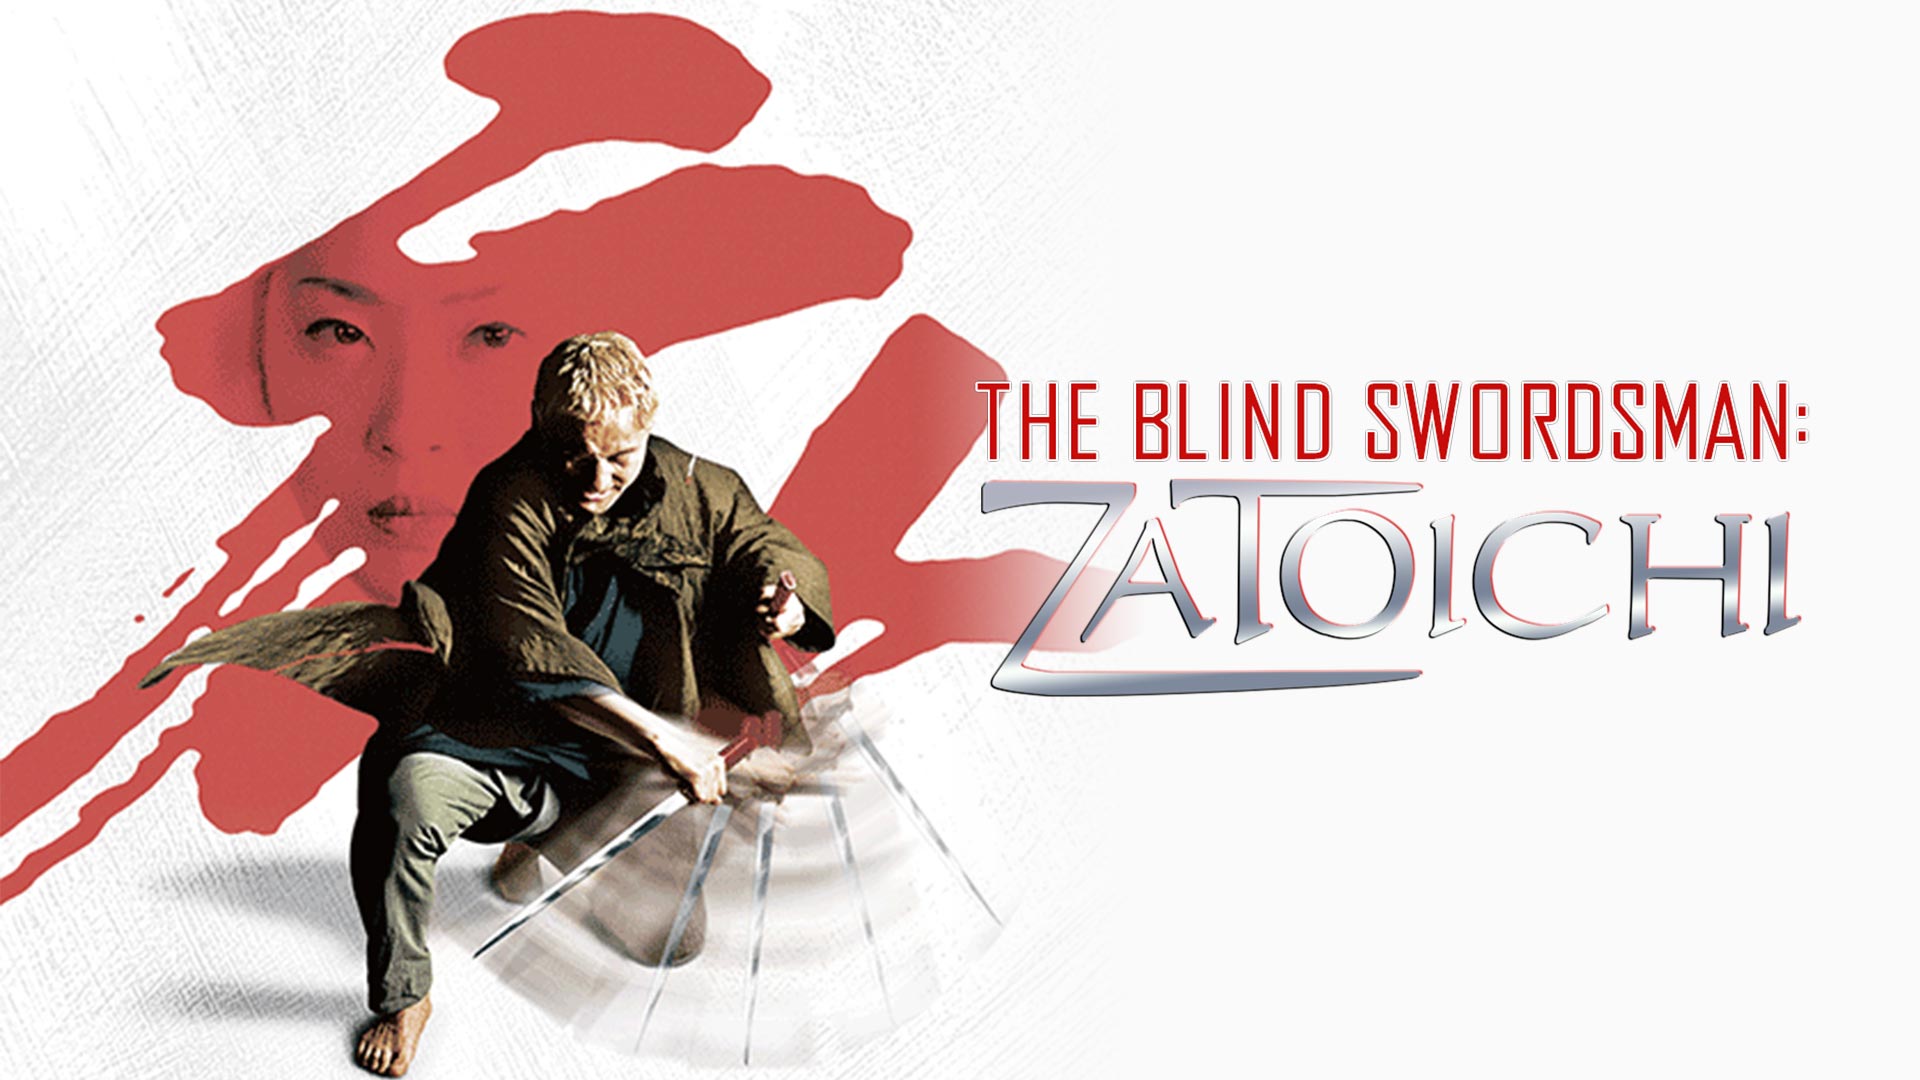 36-facts-about-the-movie-the-blind-swordsman-zatoichi